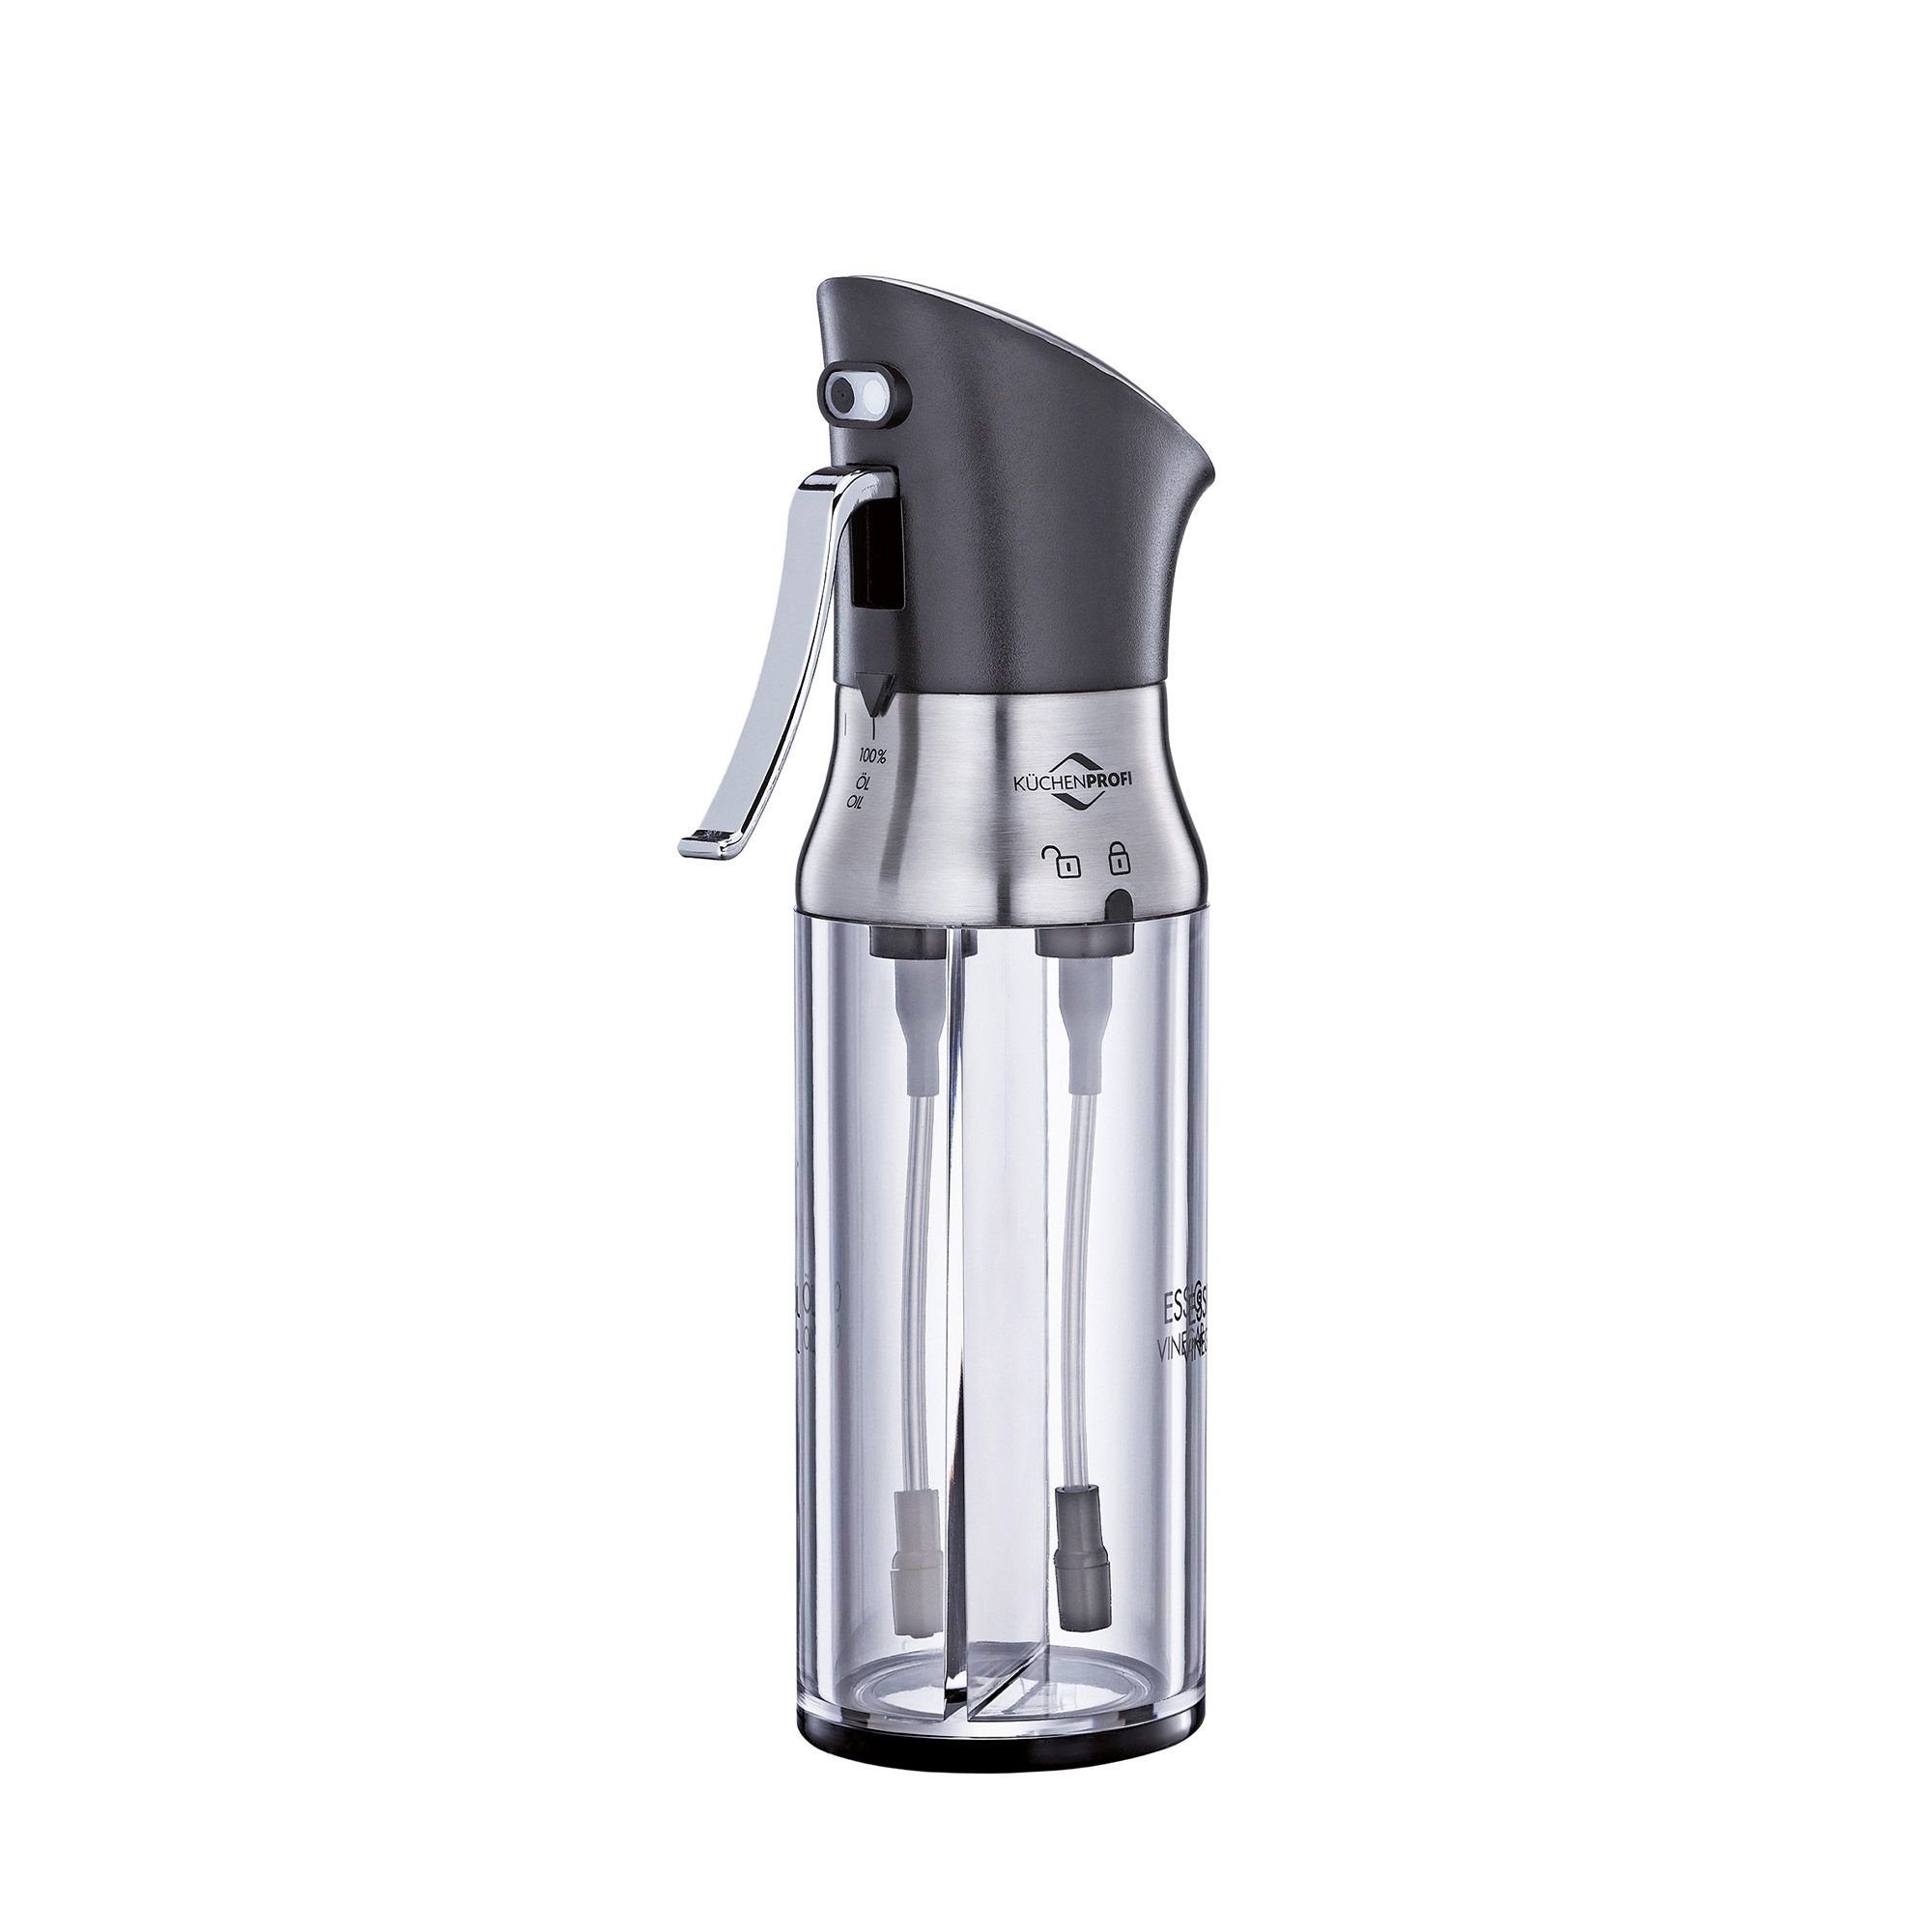 Küchenprofi - vinegar sprayer/oil dispenser SIENA